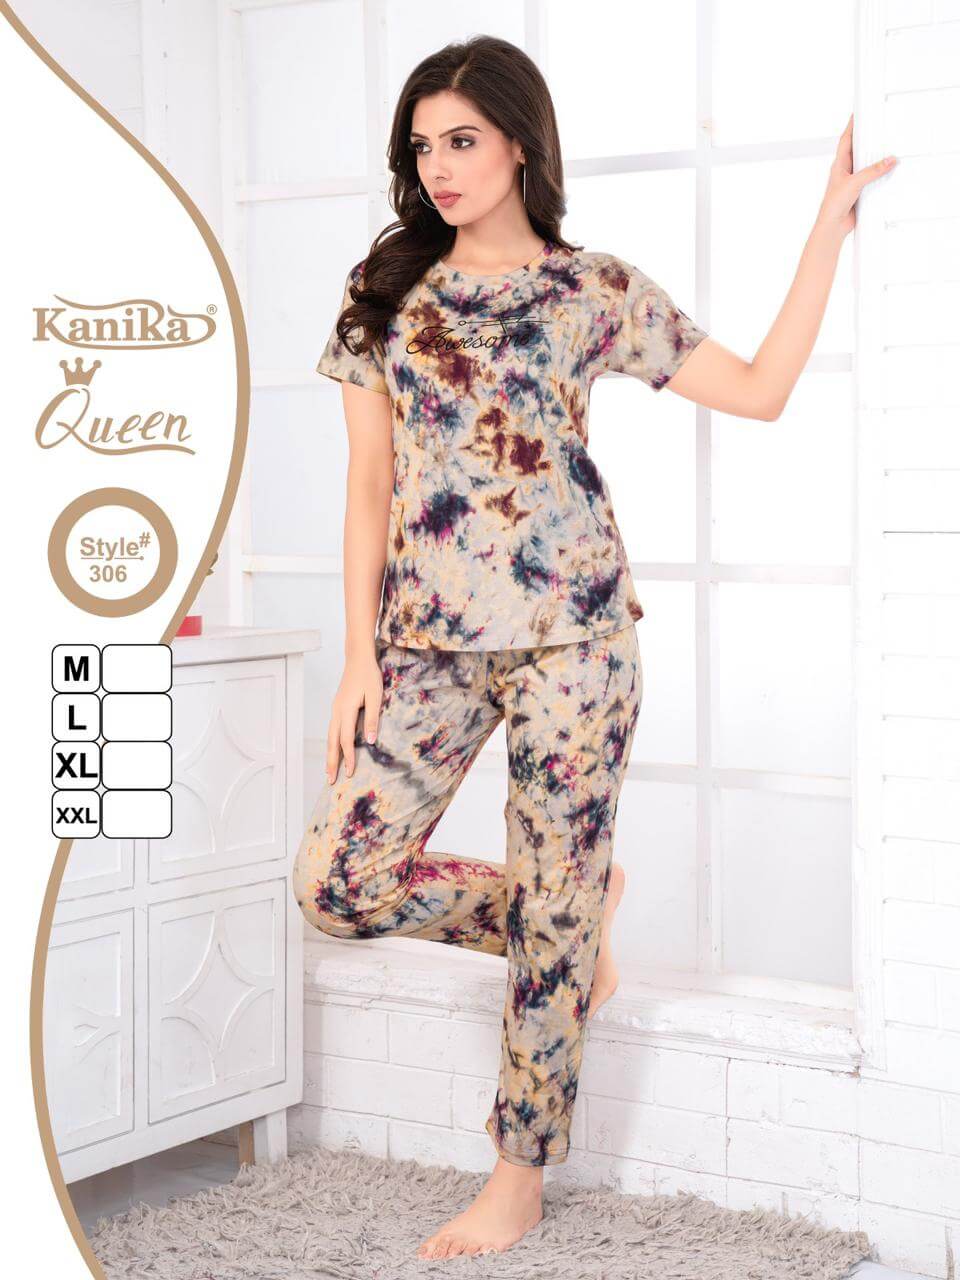 Kanika Queen Vol 2 Night Dress Catalog collection 9